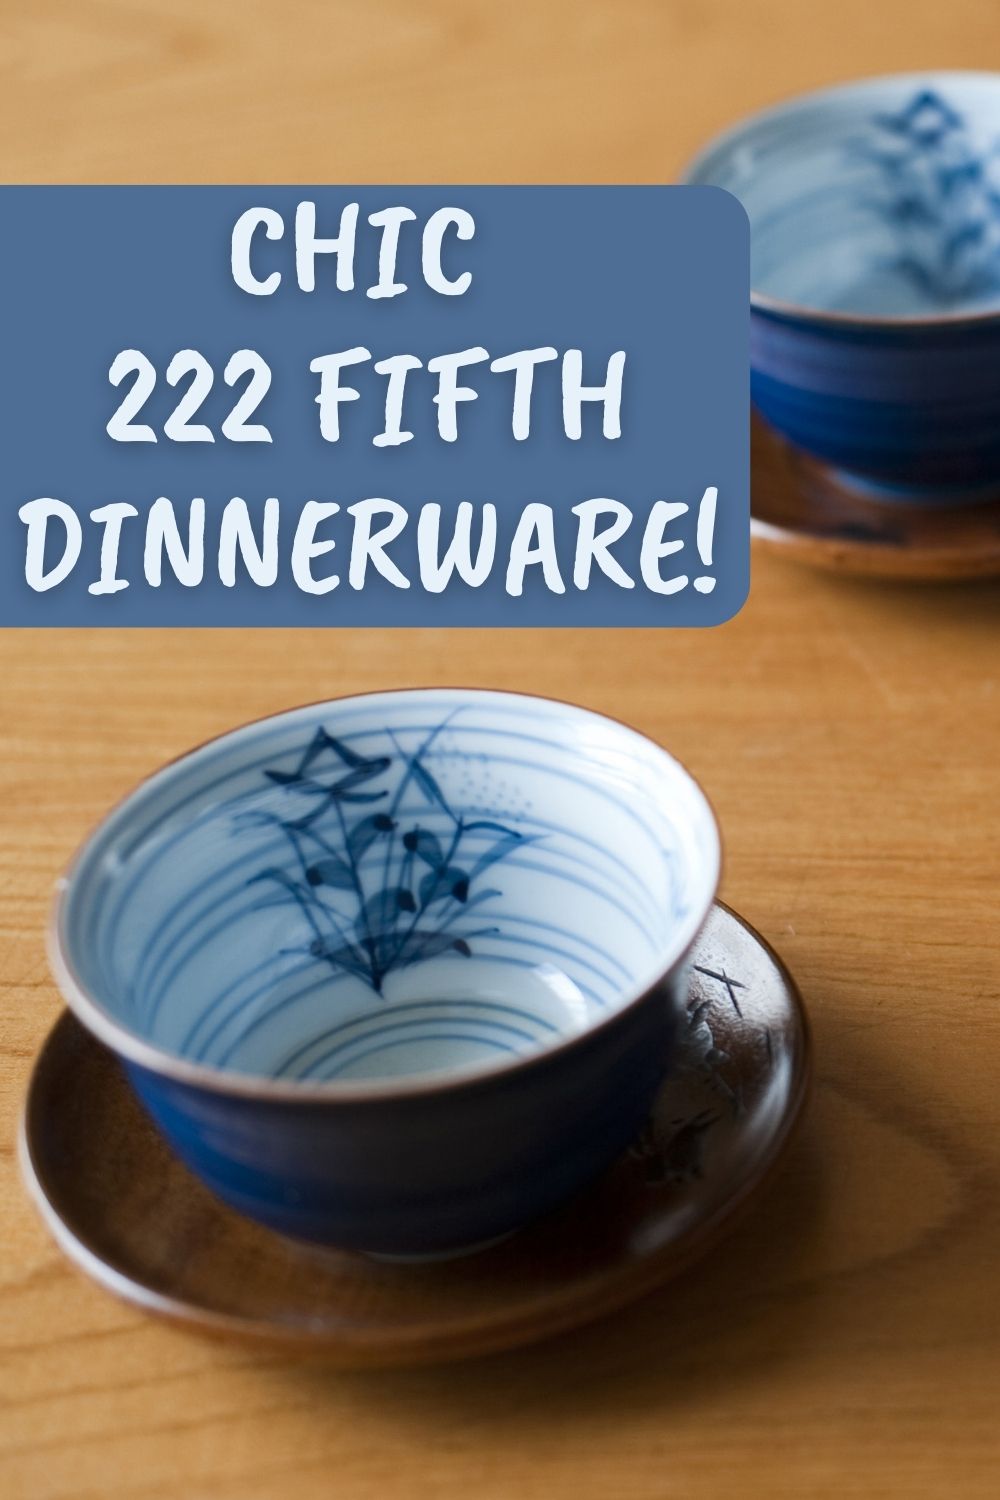 Chick 222 fifth dinnerware.